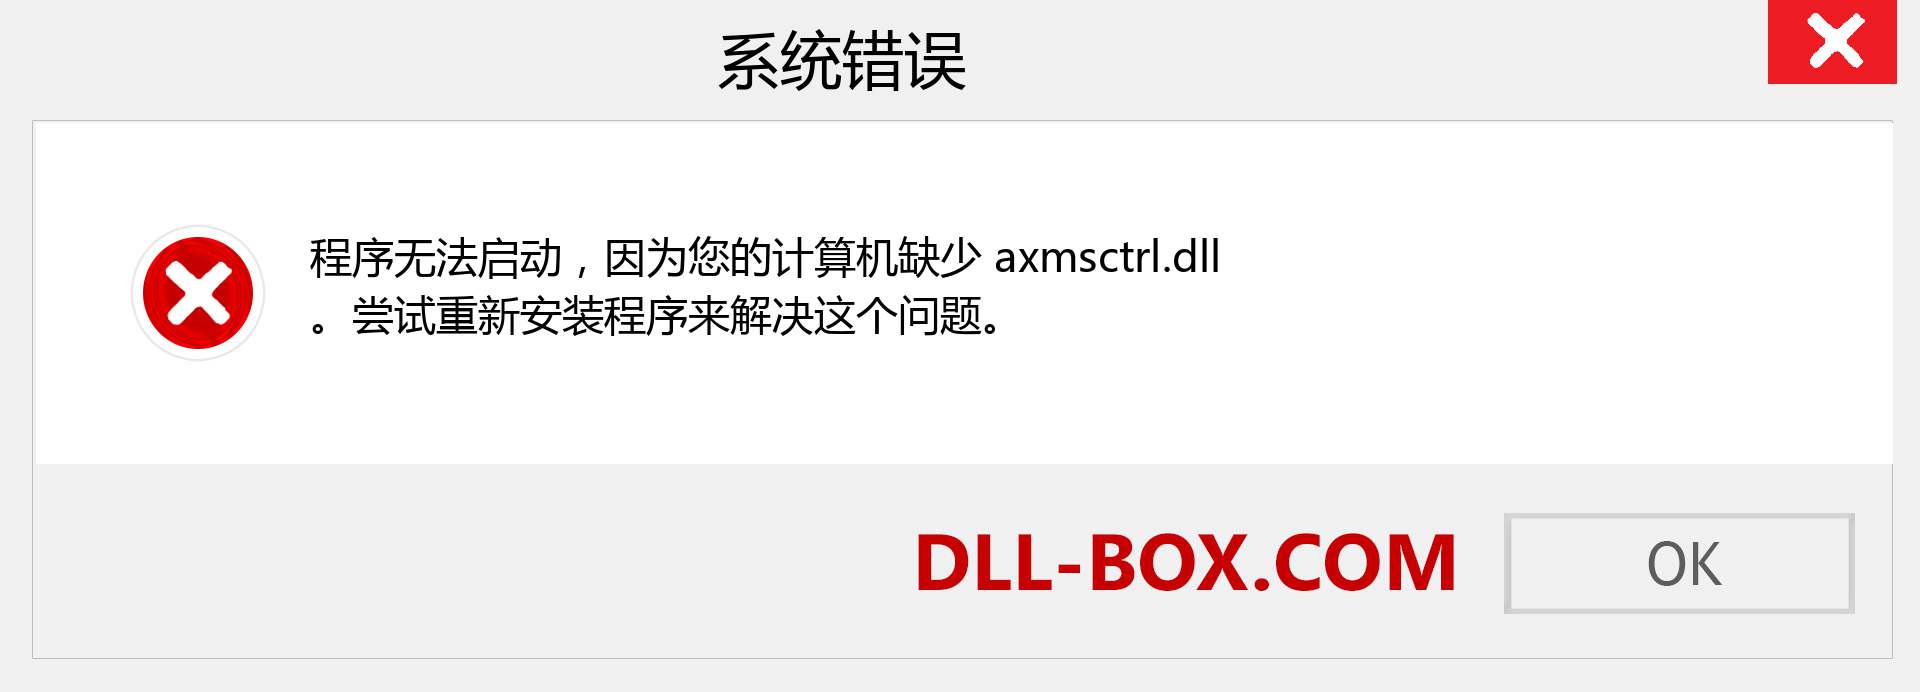 axmsctrl.dll 文件丢失？。 适用于 Windows 7、8、10 的下载 - 修复 Windows、照片、图像上的 axmsctrl dll 丢失错误